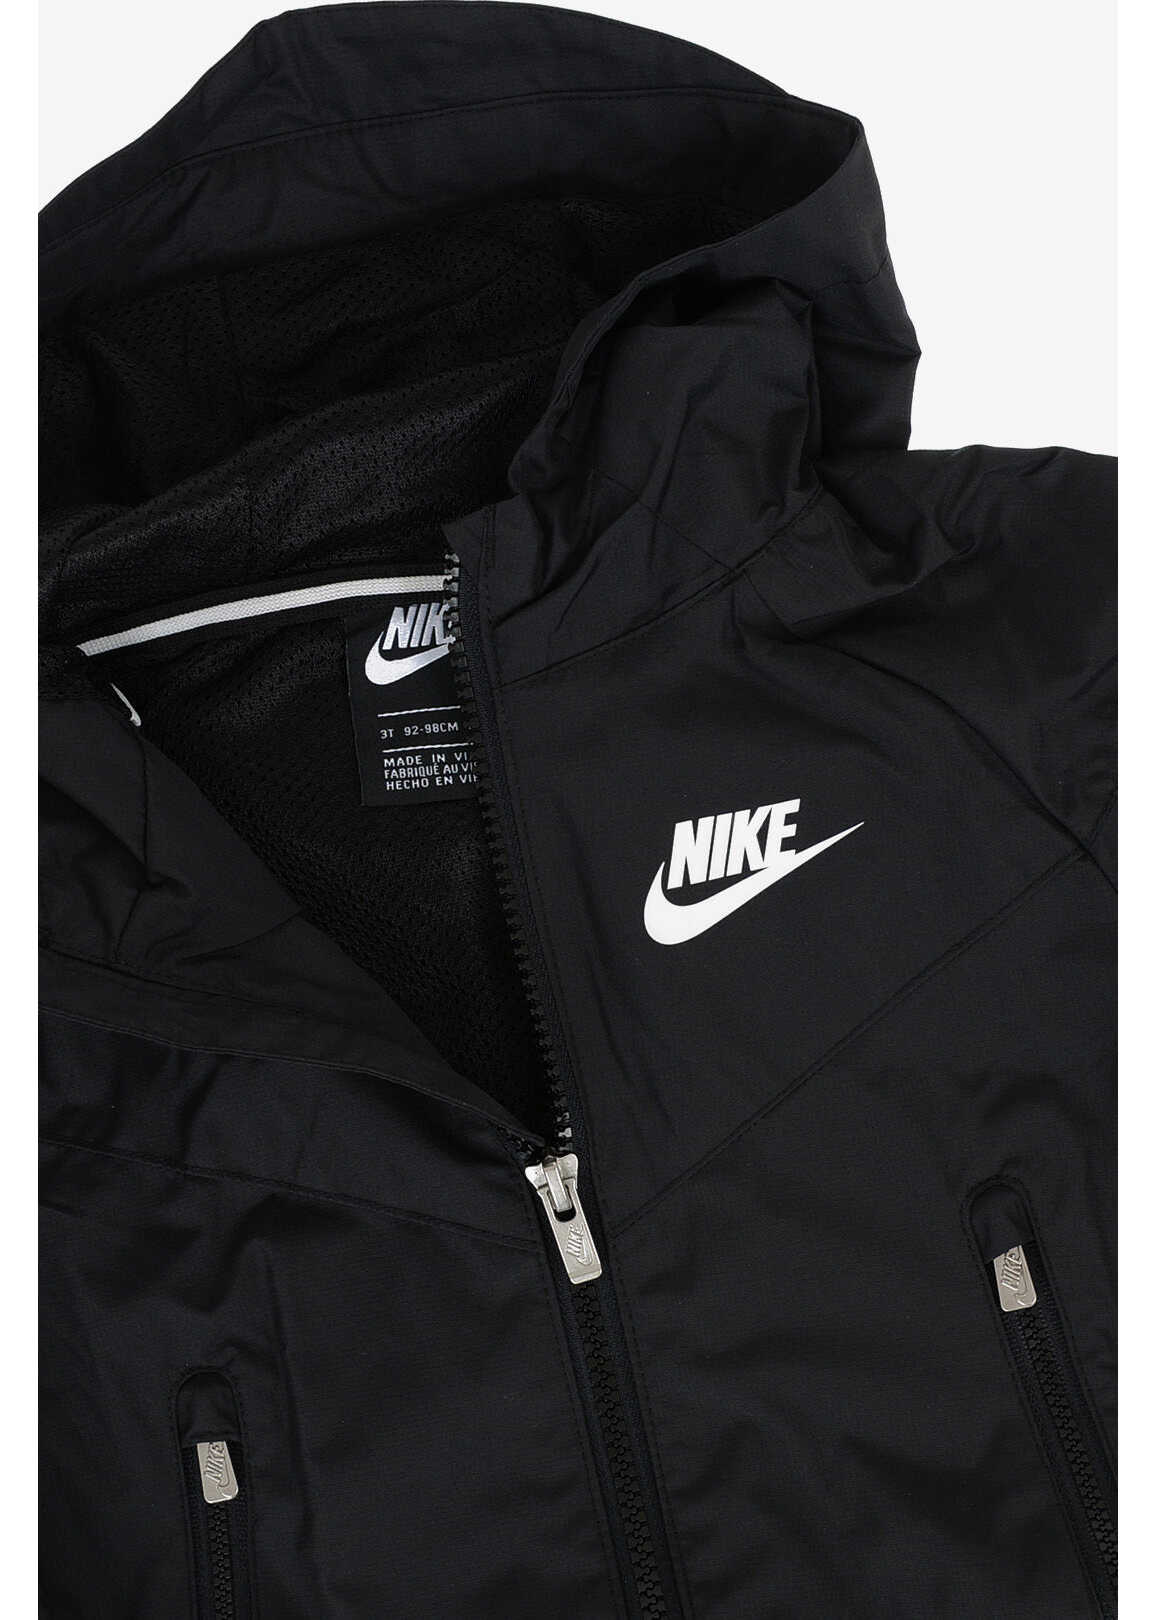 Nike Hooded Windbreaker Jacket Black